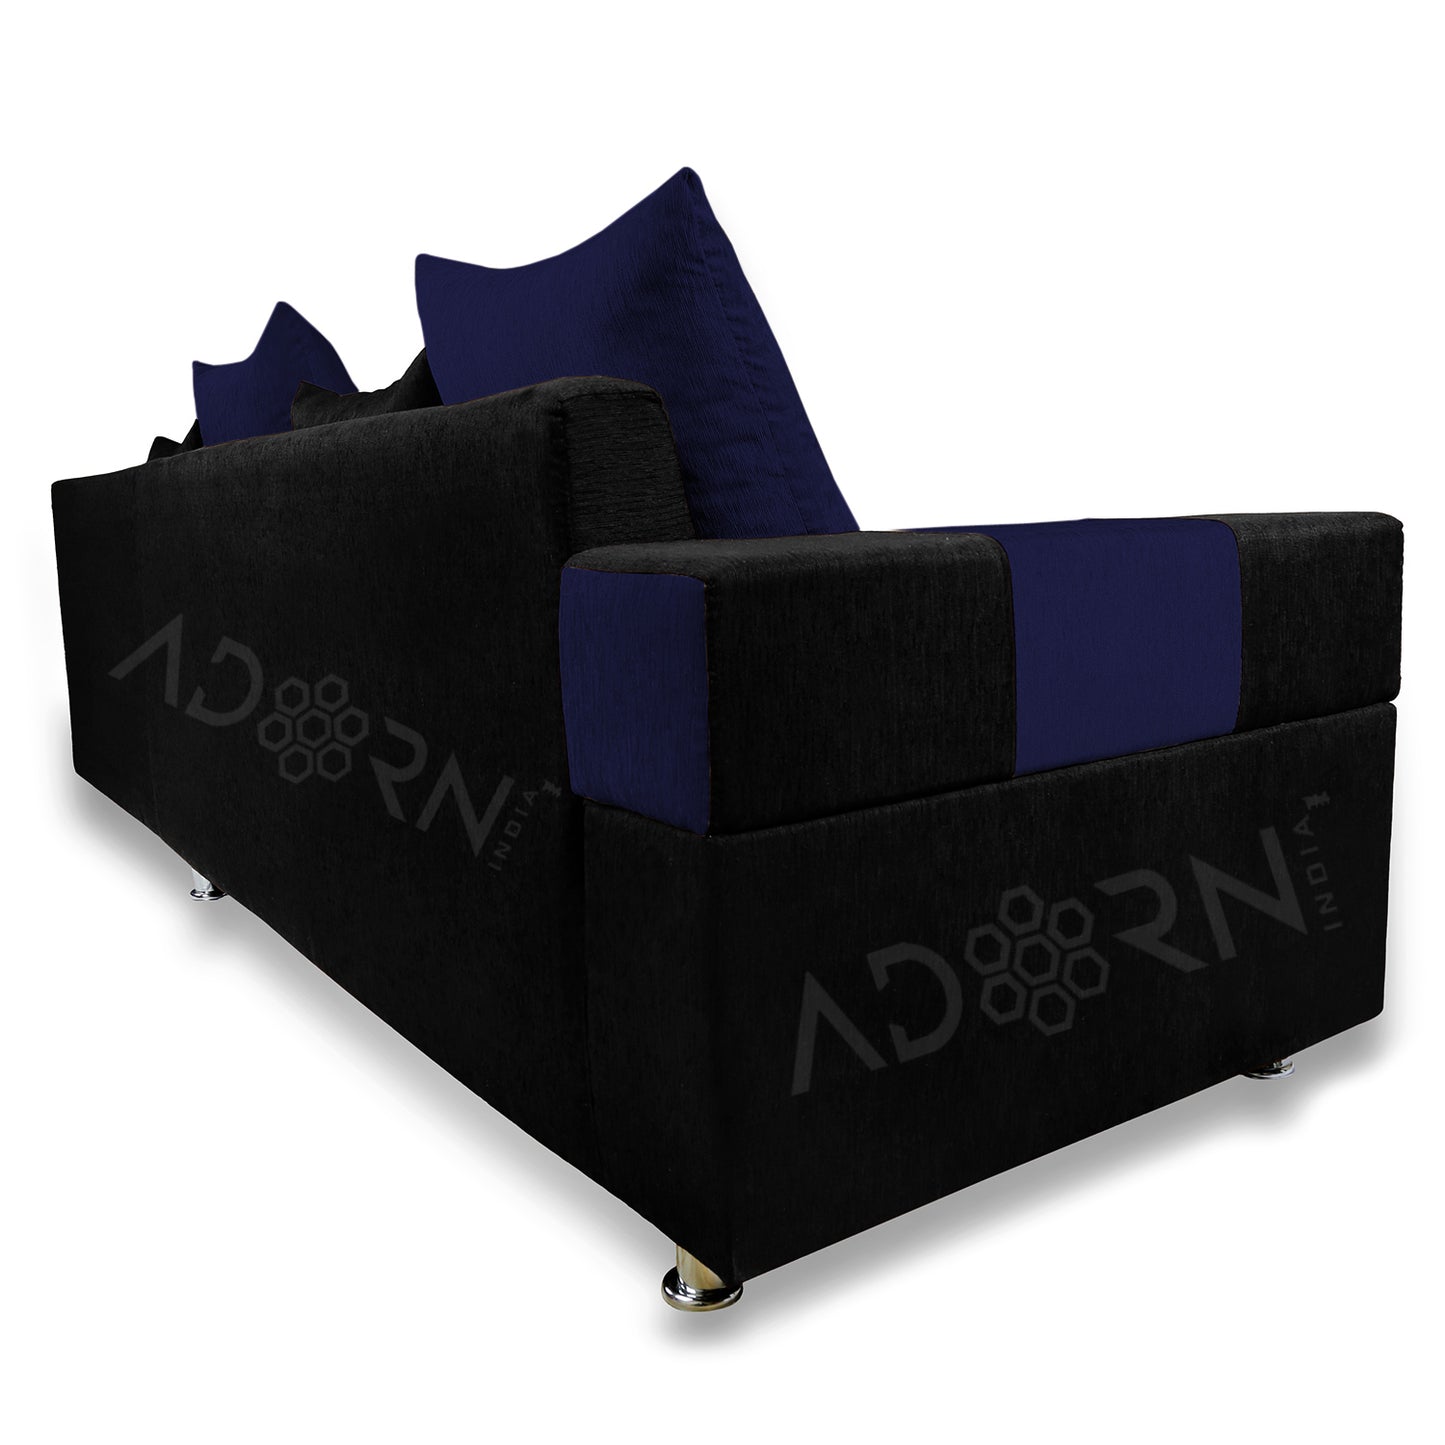 Adorn India Adillac 6 Seater Corner Sofa(Right Side)(Navy Blue & Black)